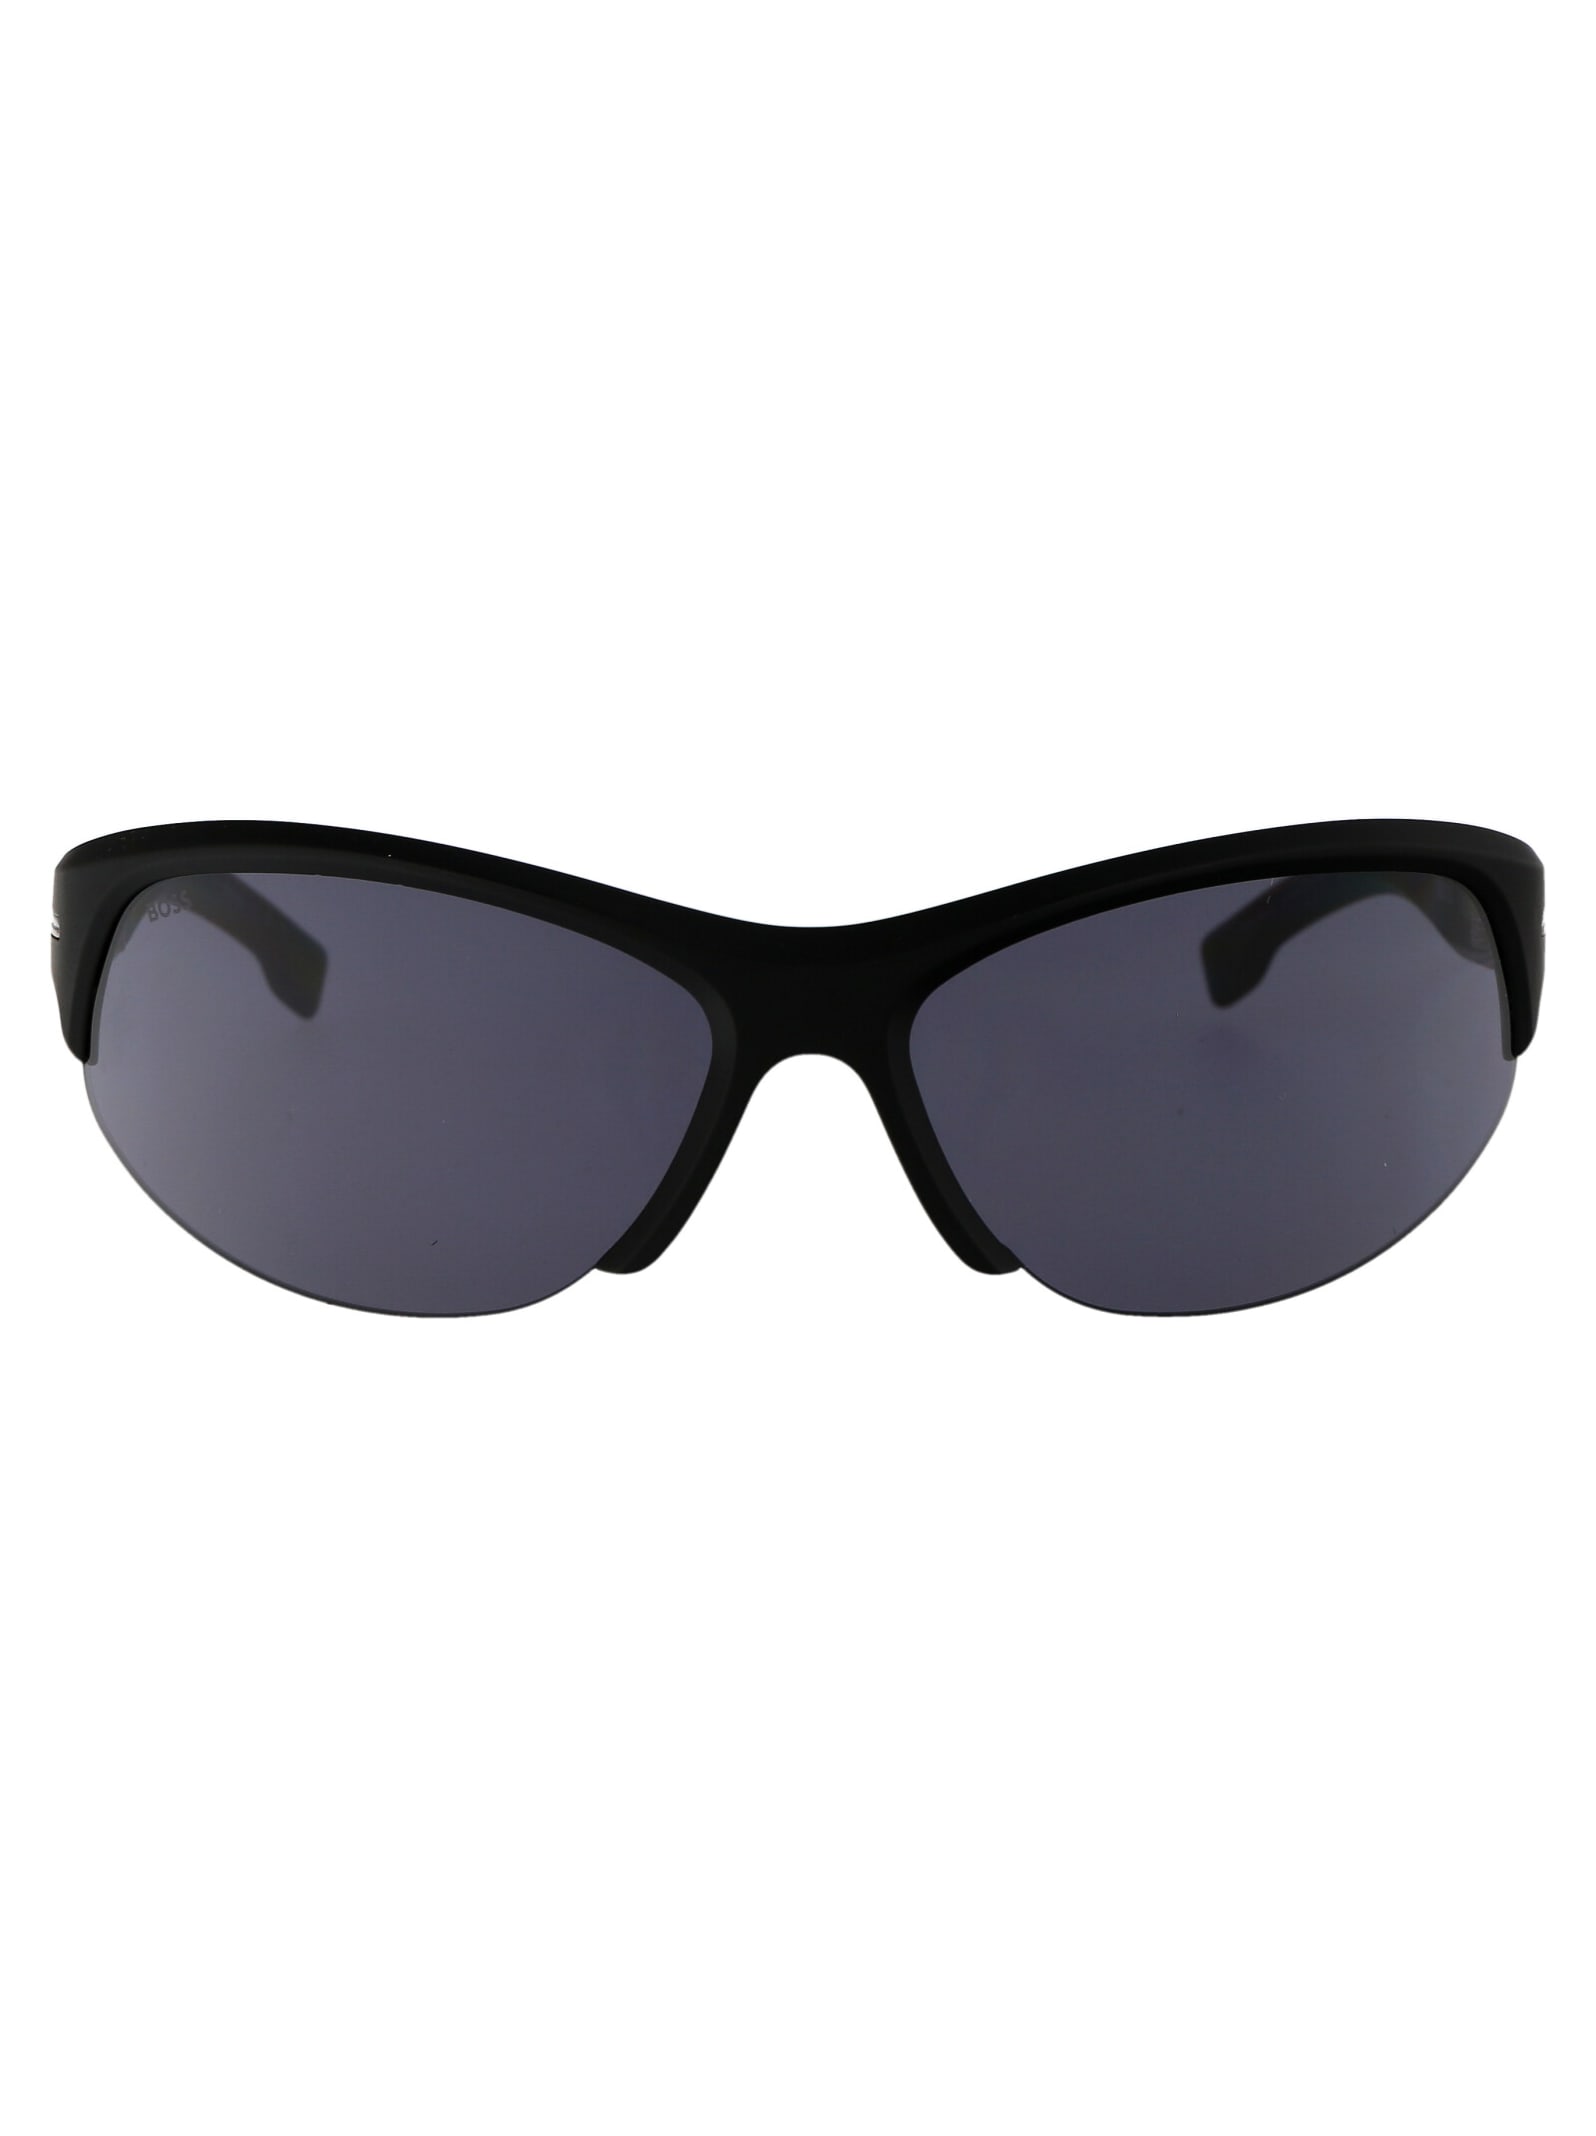 Boss 1624/s Sunglasses